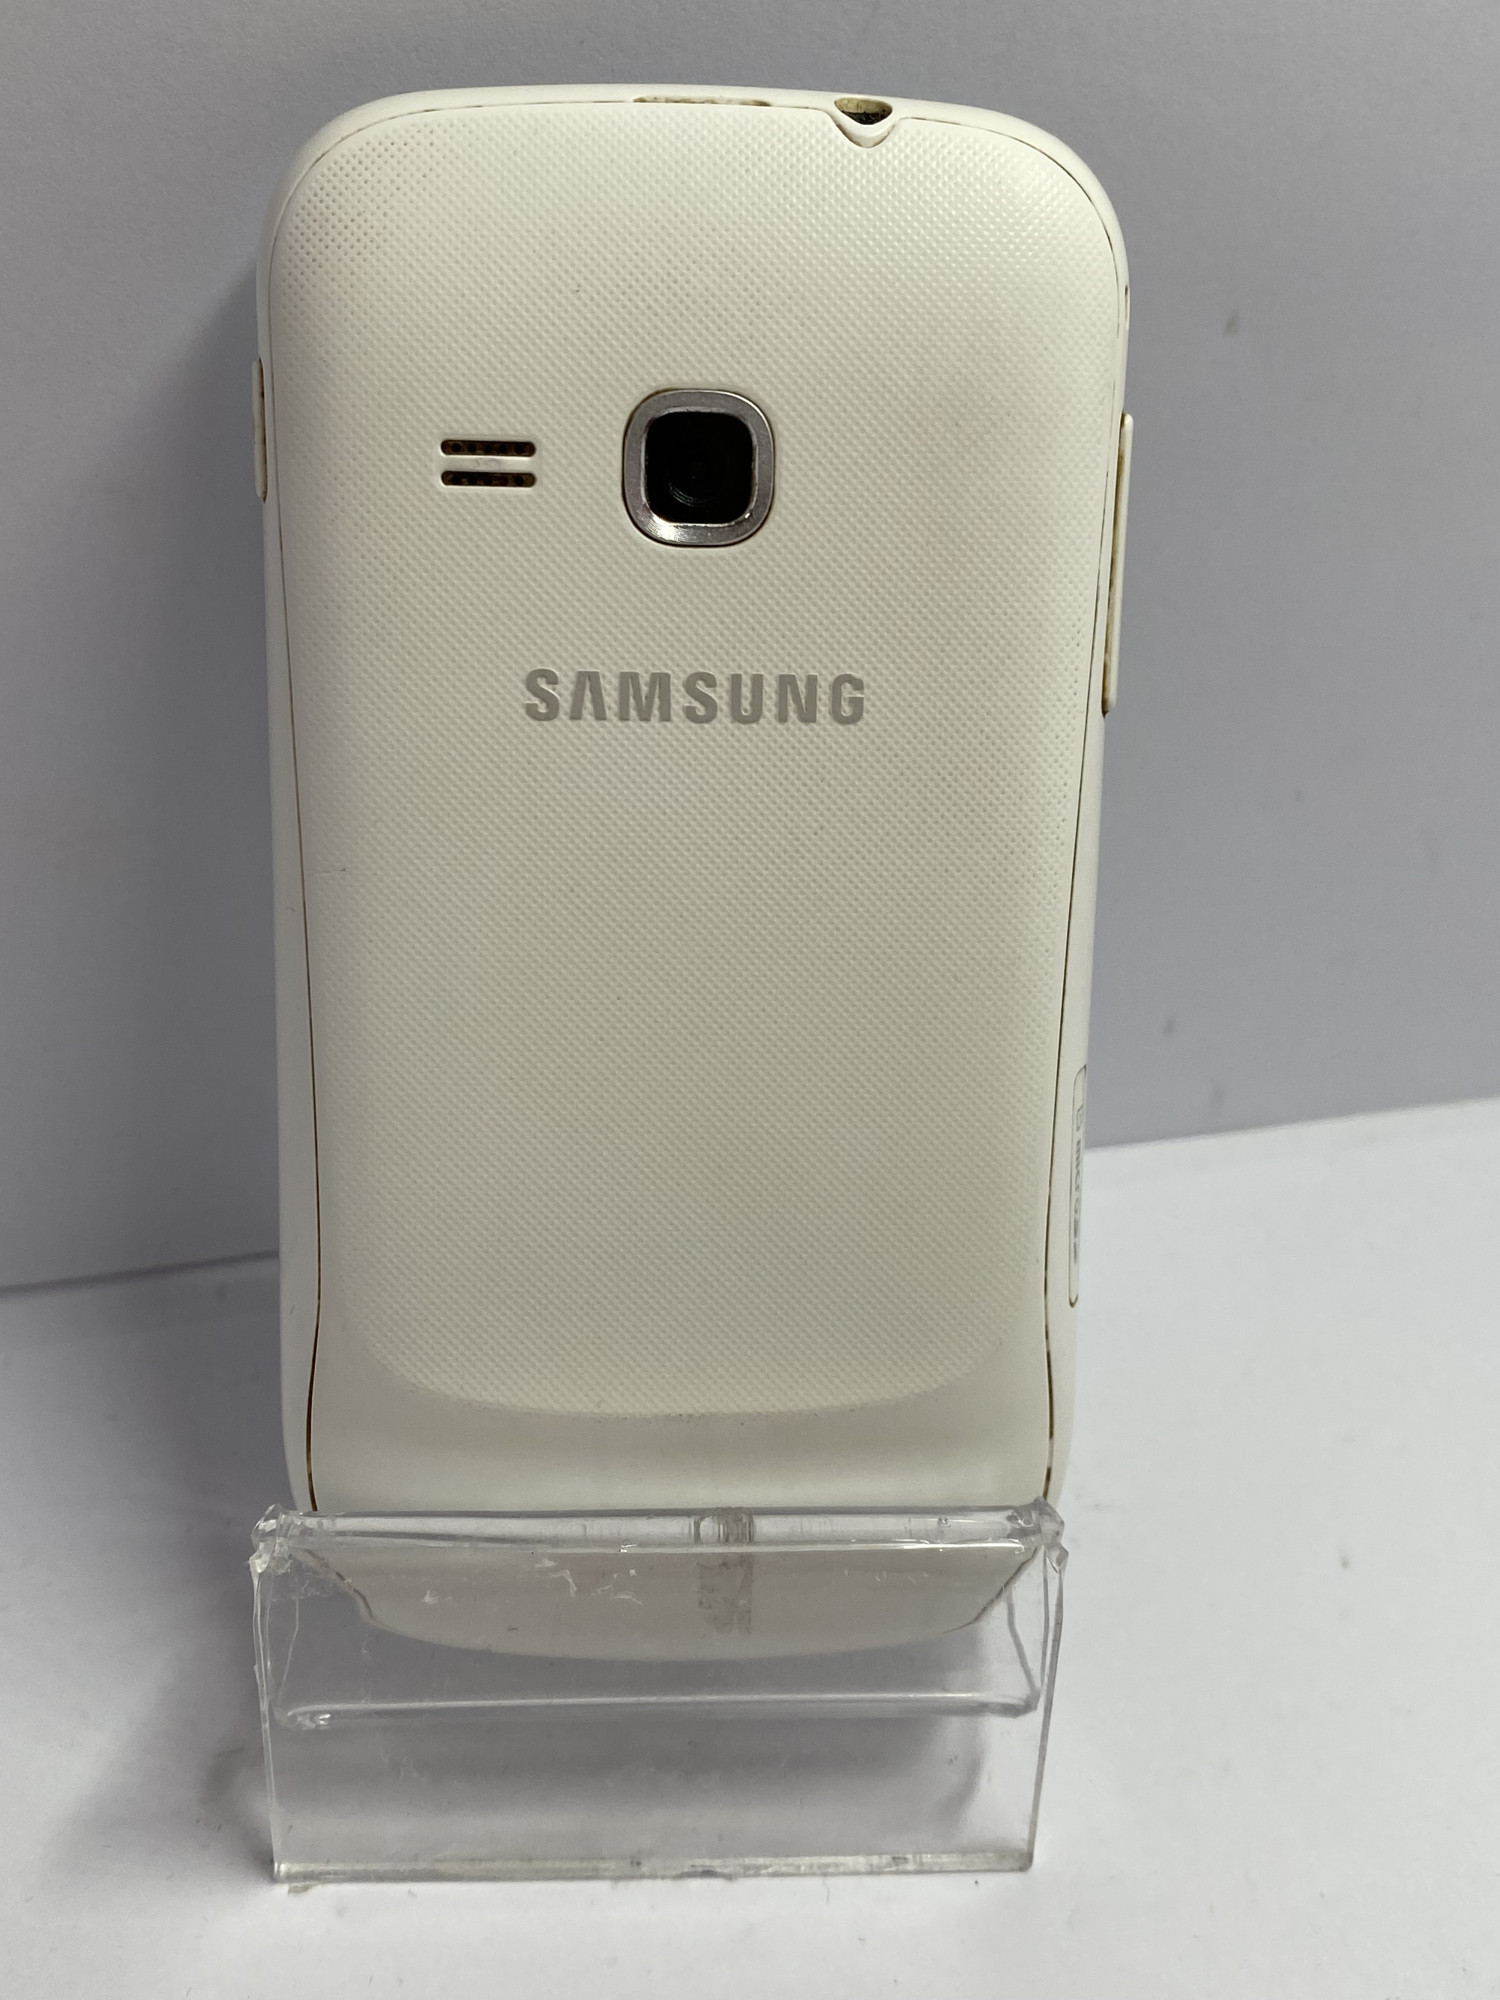 Samsung Galaxy Mini 2 (GT-S6500) 4Gb 2